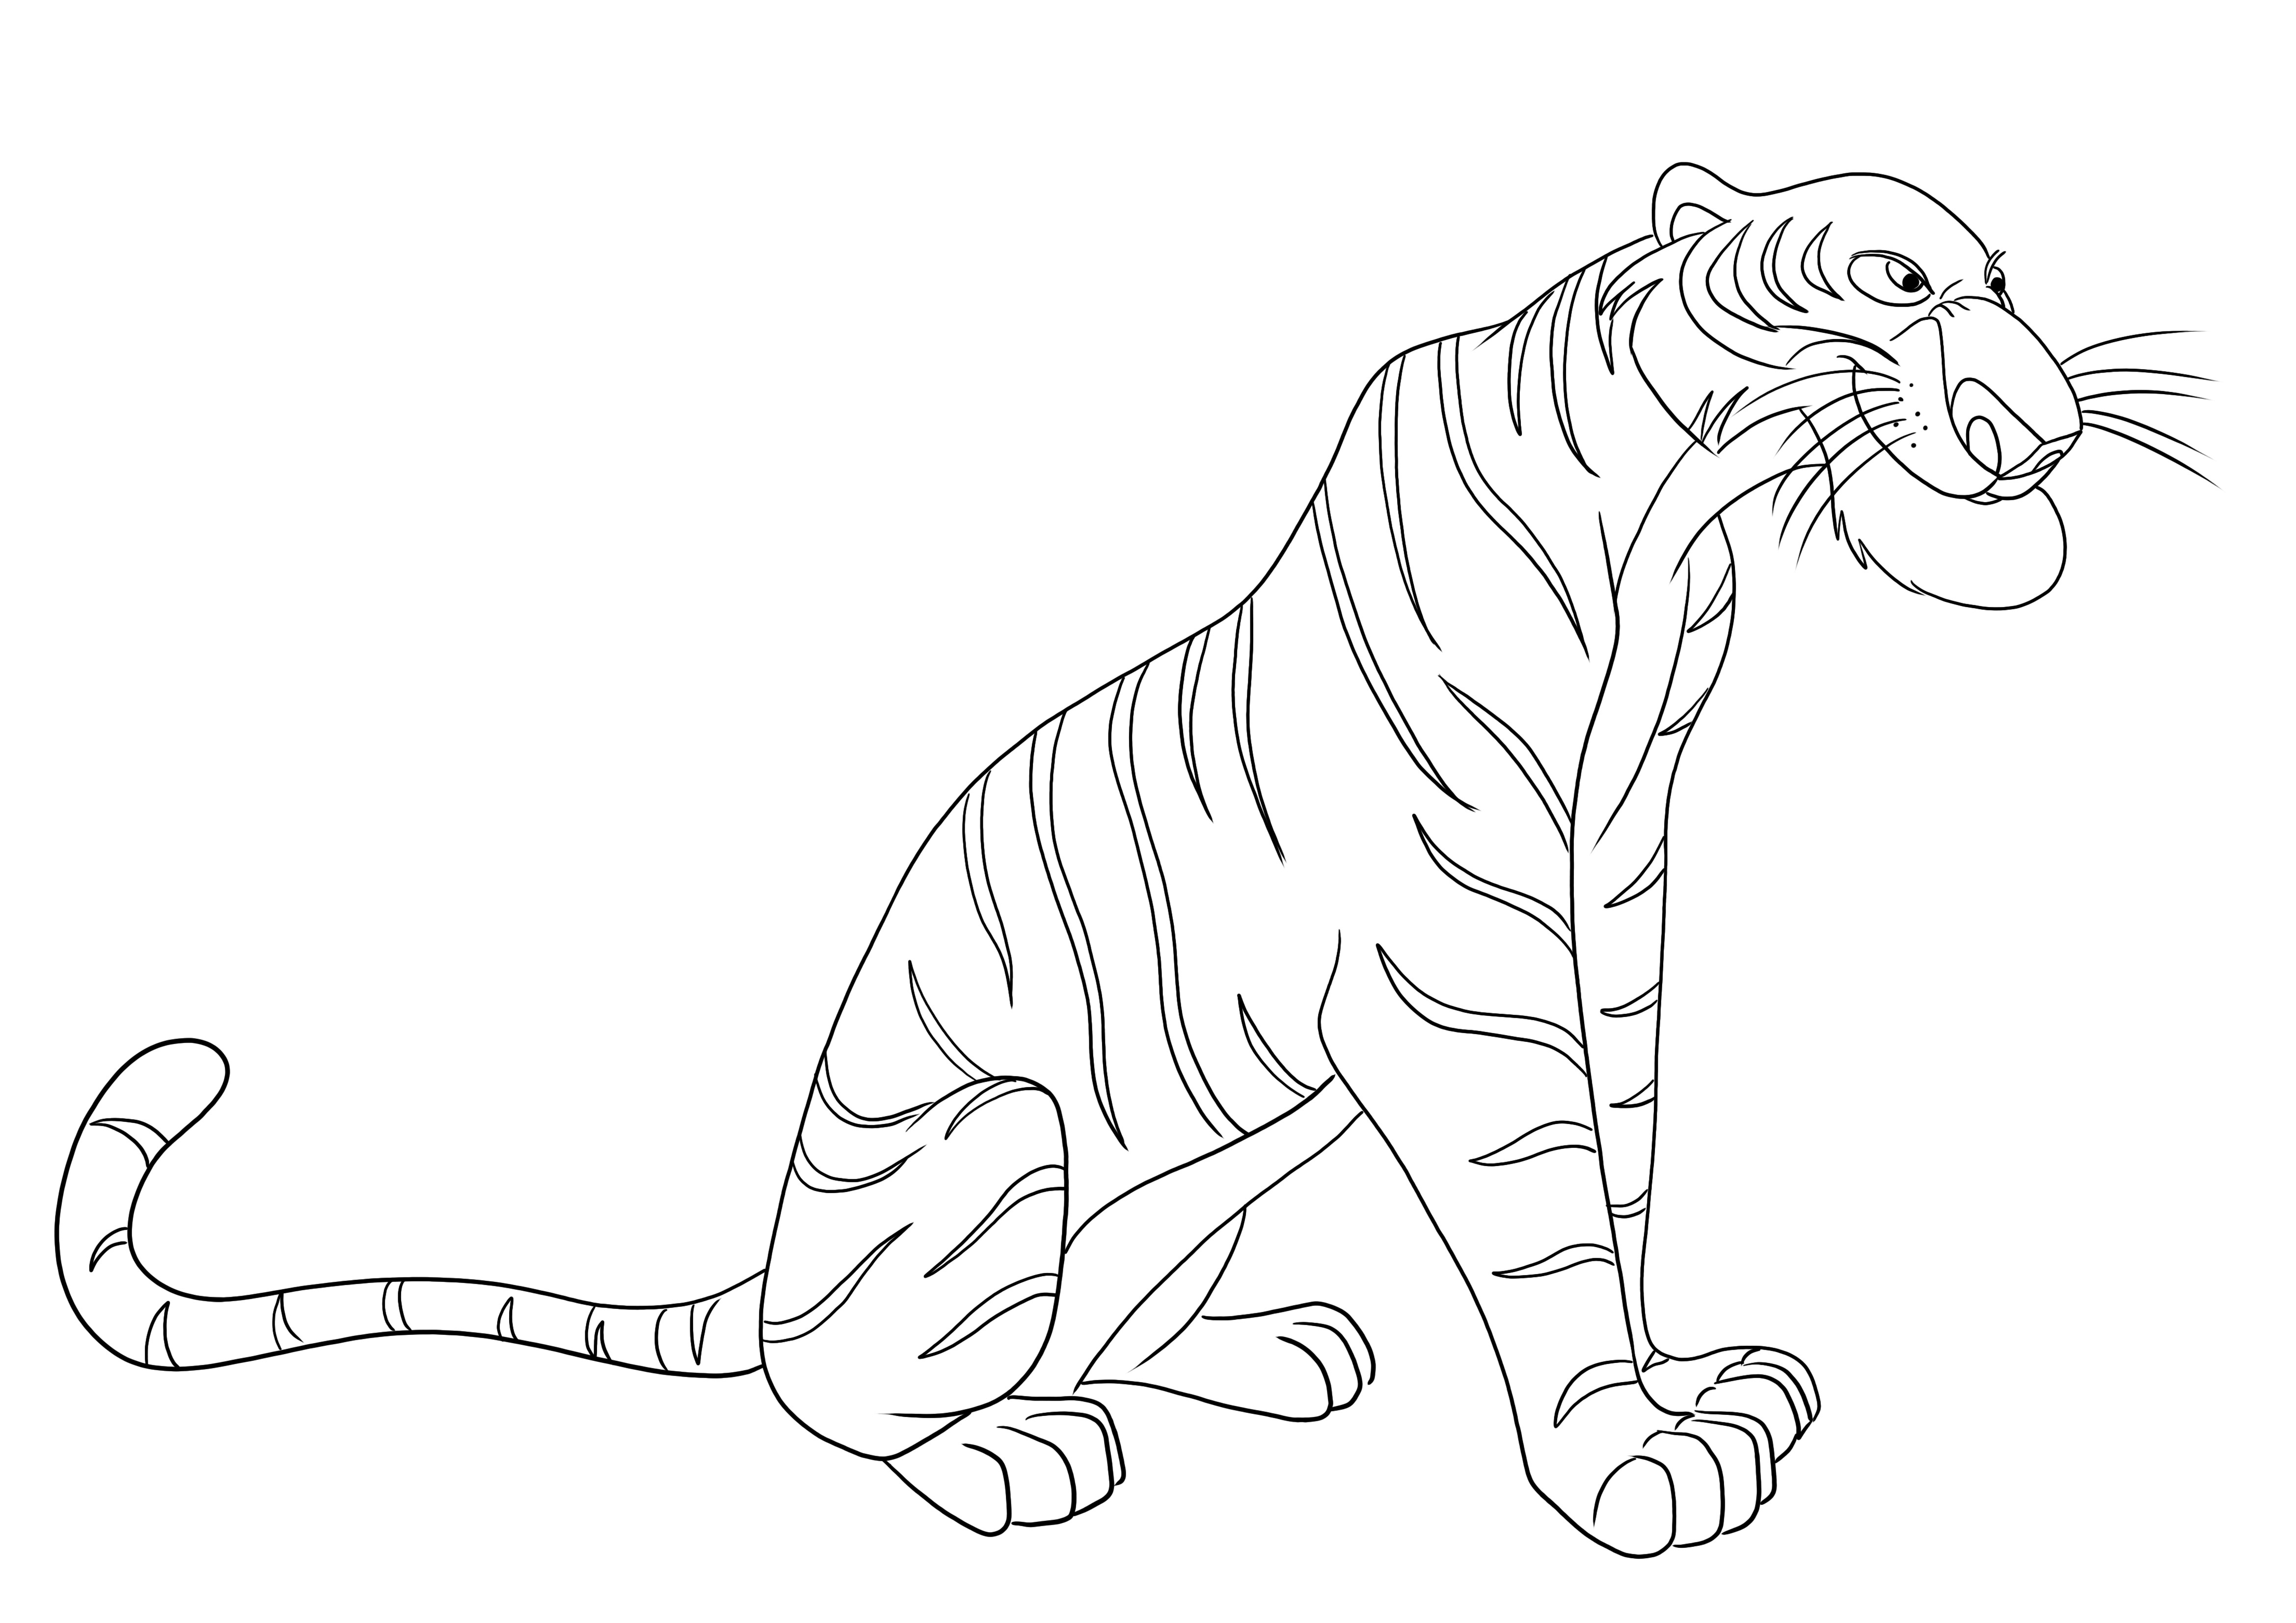 Shere Khan the Tiger from the Book of Jungle kleurplaat gratis te downloaden kleurplaat